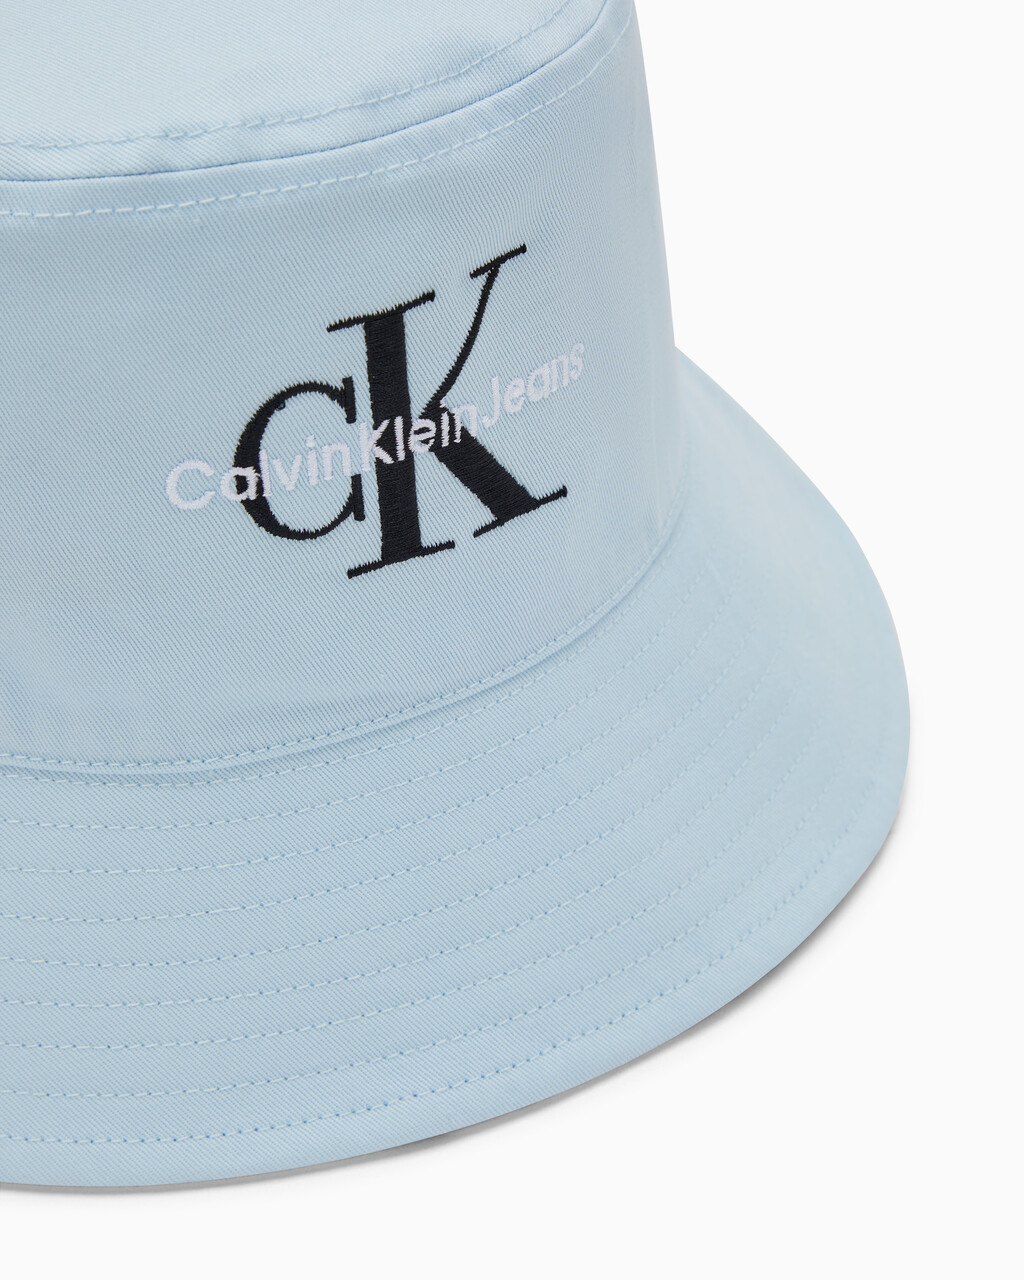 Monogram 漁夫帽, KEEPSAKE BLUE, hi-res